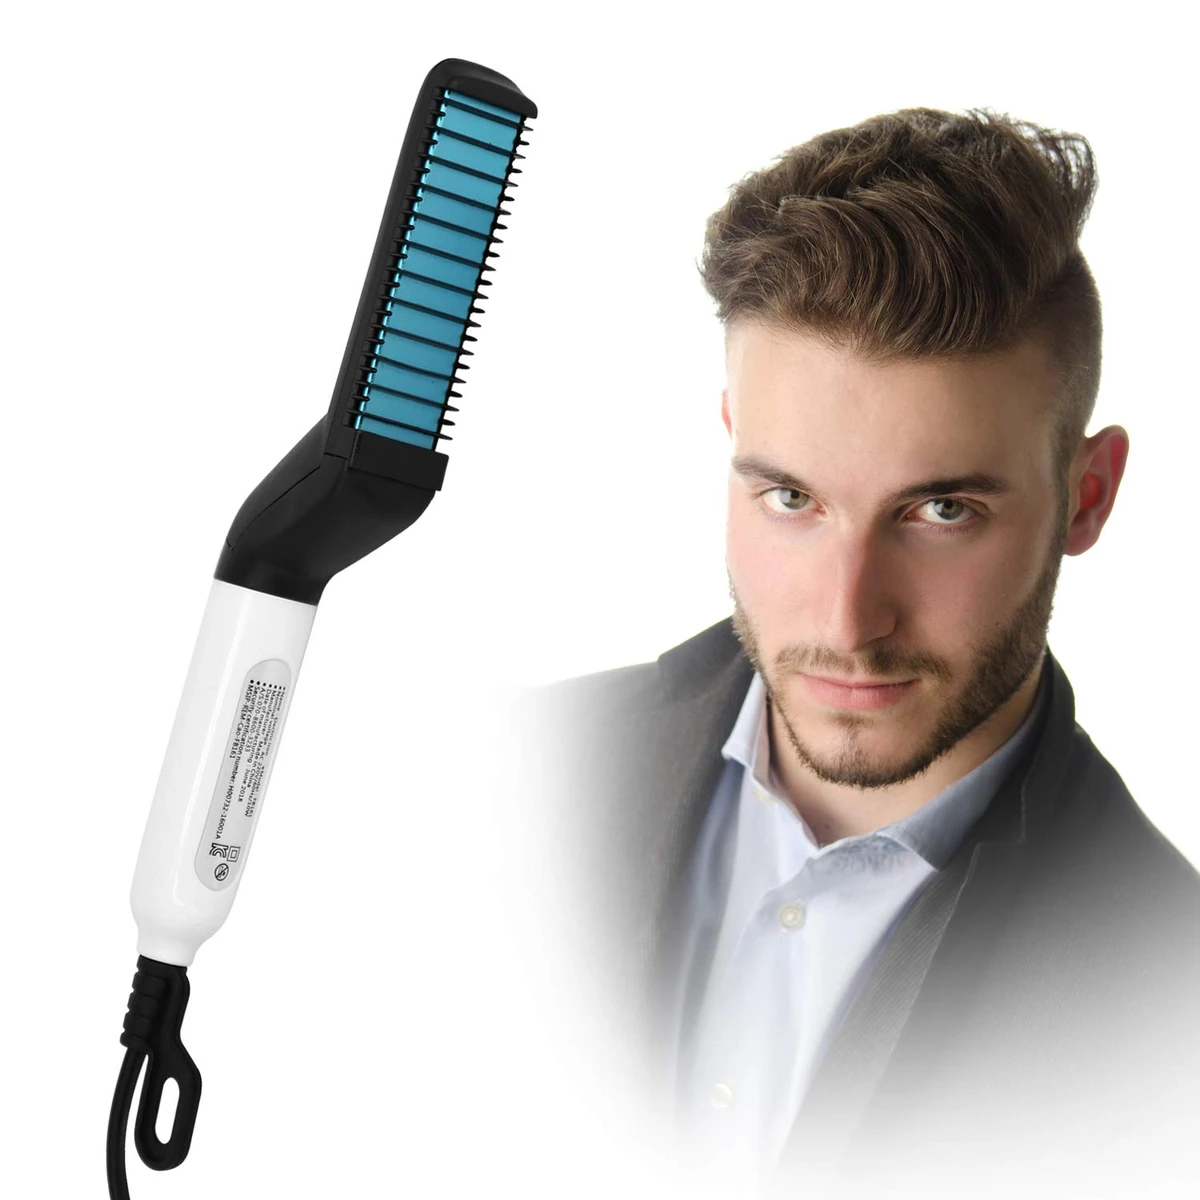 Modelling Comb for beard